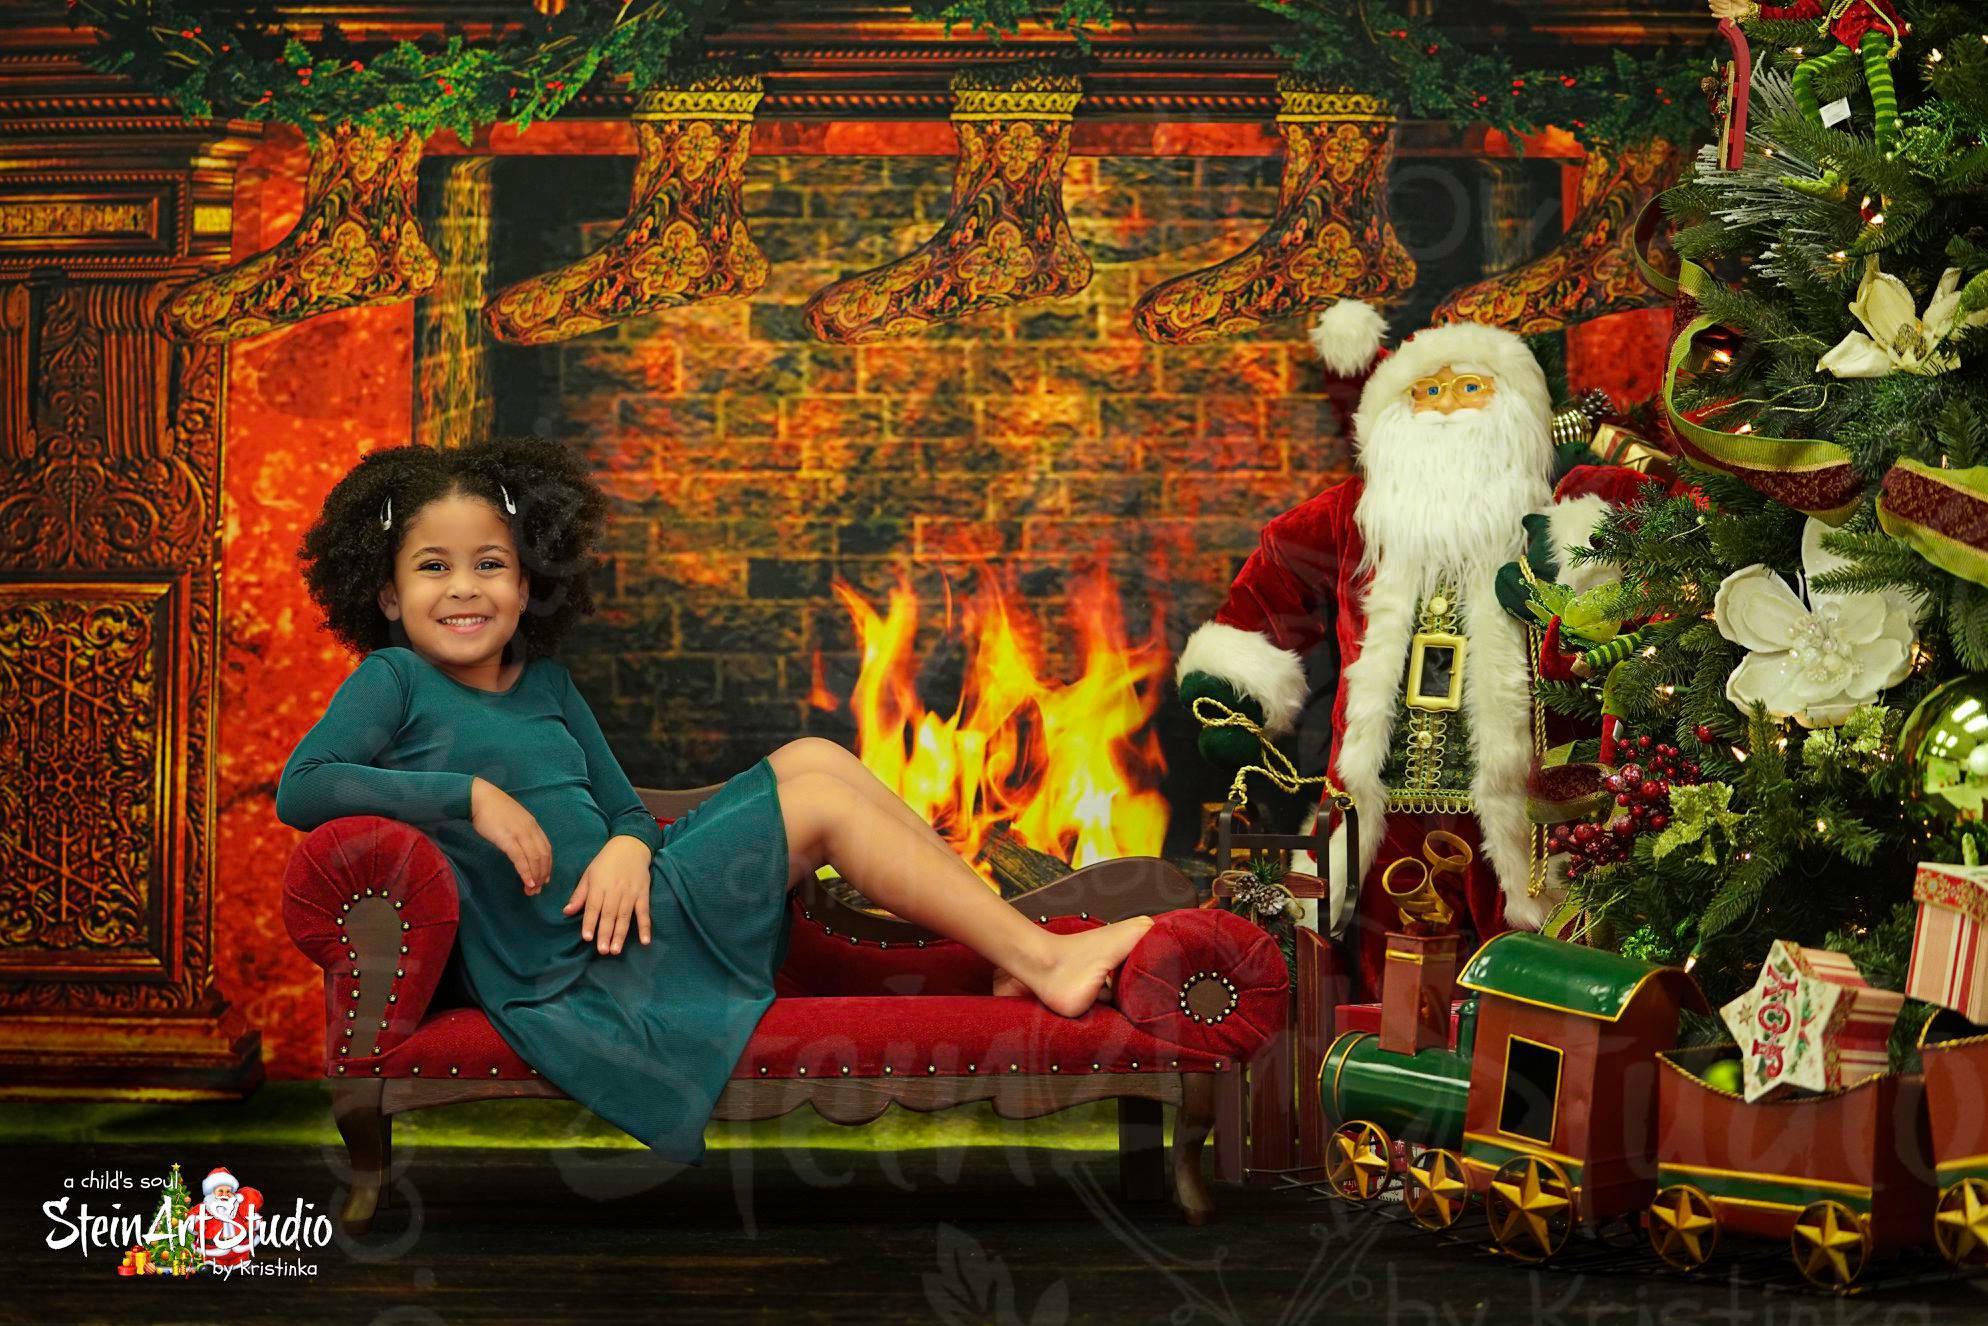 Kate Fireplace Stockings Backdrop for Christmas Photography - Kate backdrop UK